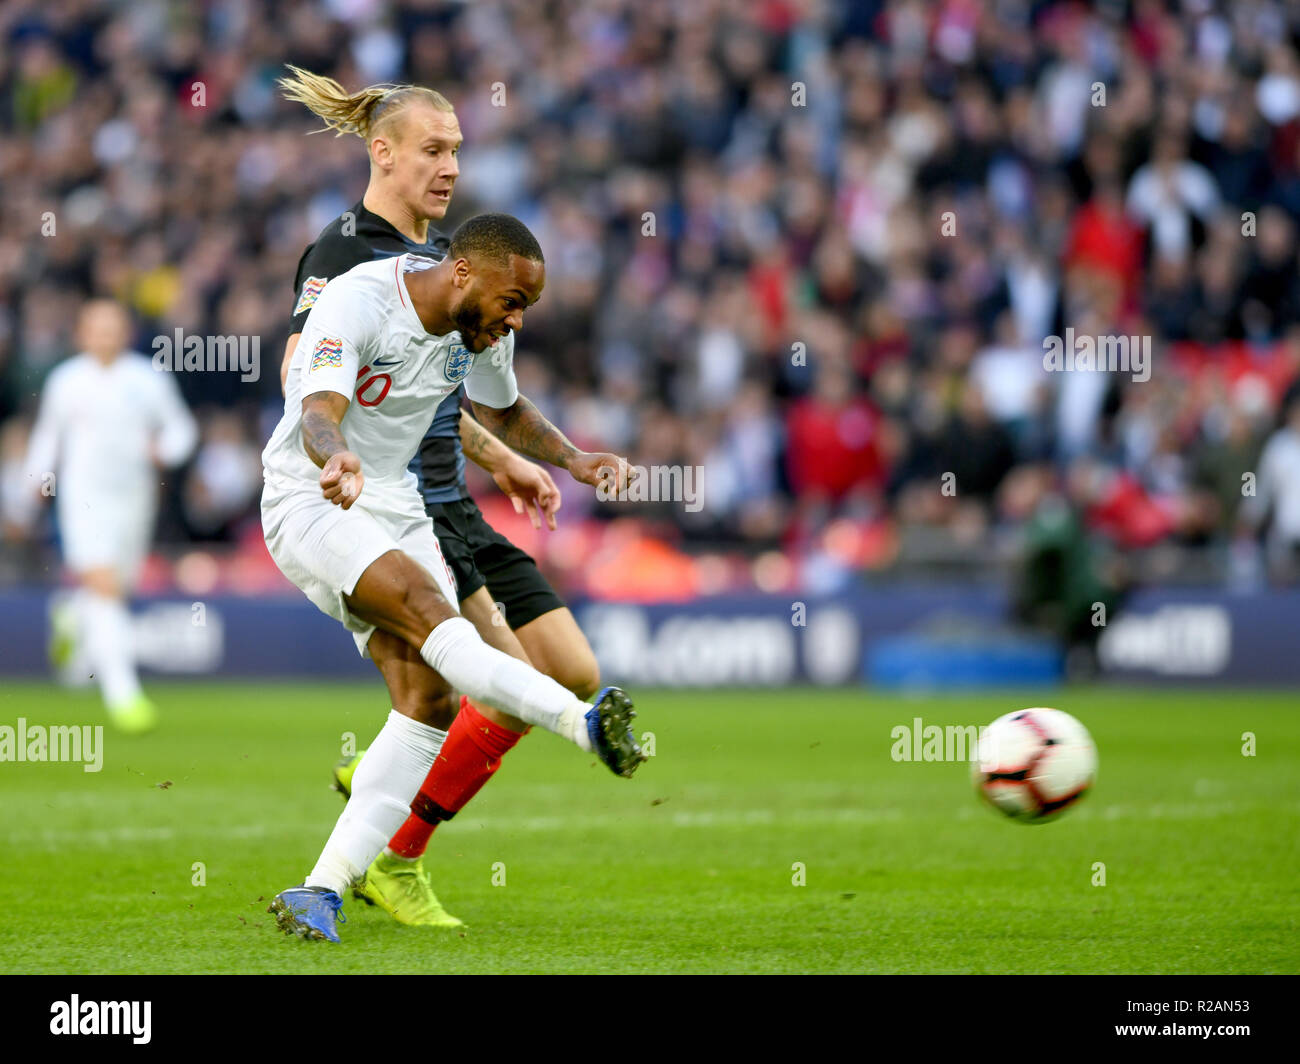 Raheem Sterling of England has a shot on goal- England v Croatia , UEFA Nations League - Group A4, Wembley Stadium, London - 18th November 2018 Stock Photo